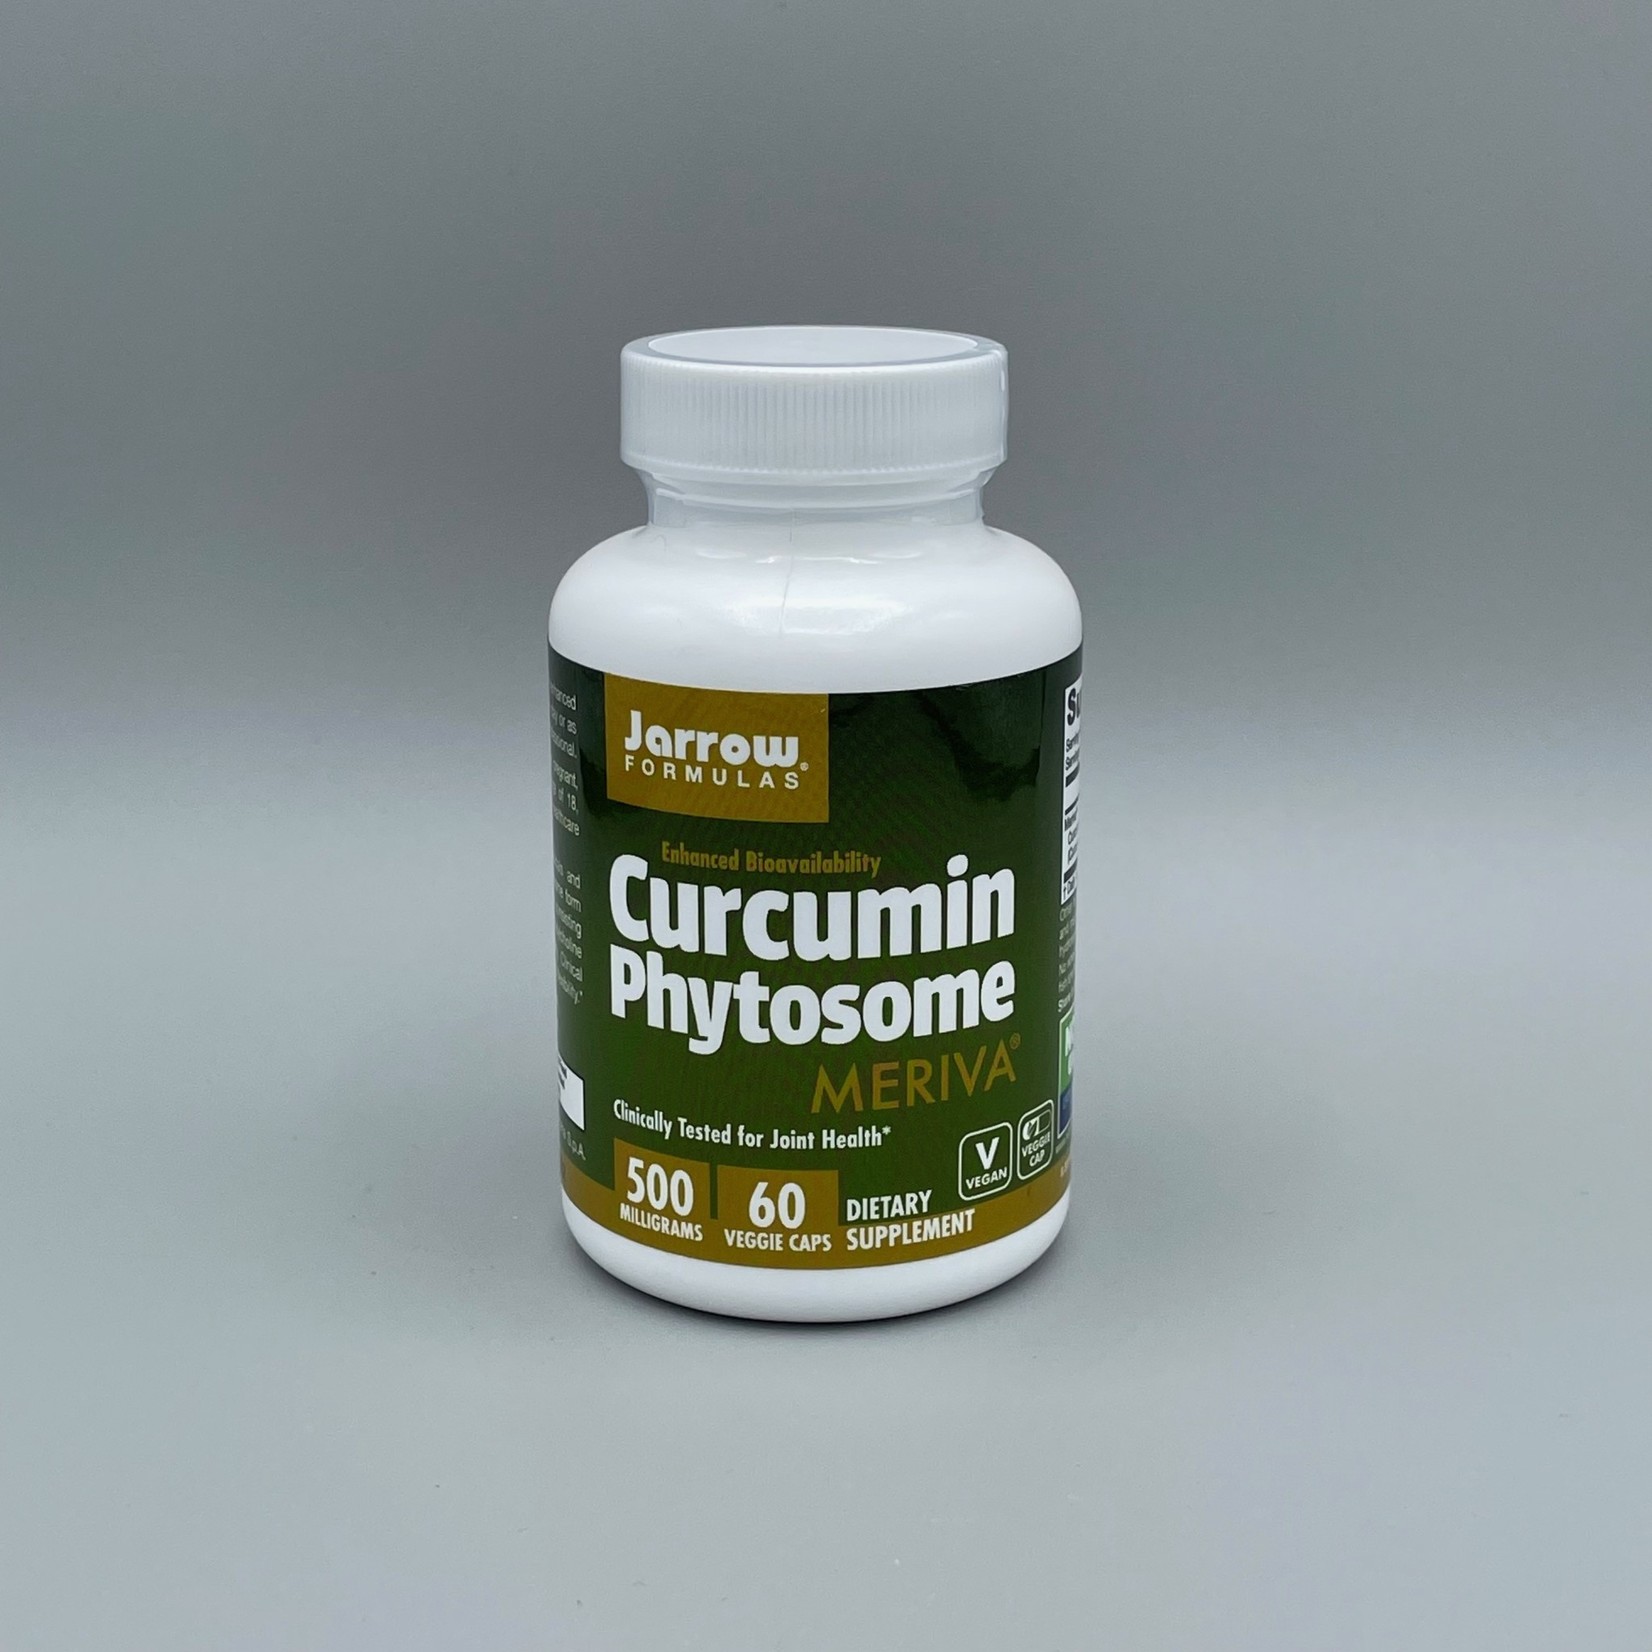 Jarrow Formulas Curcumin Phytosome (Meriva) - 500 mg